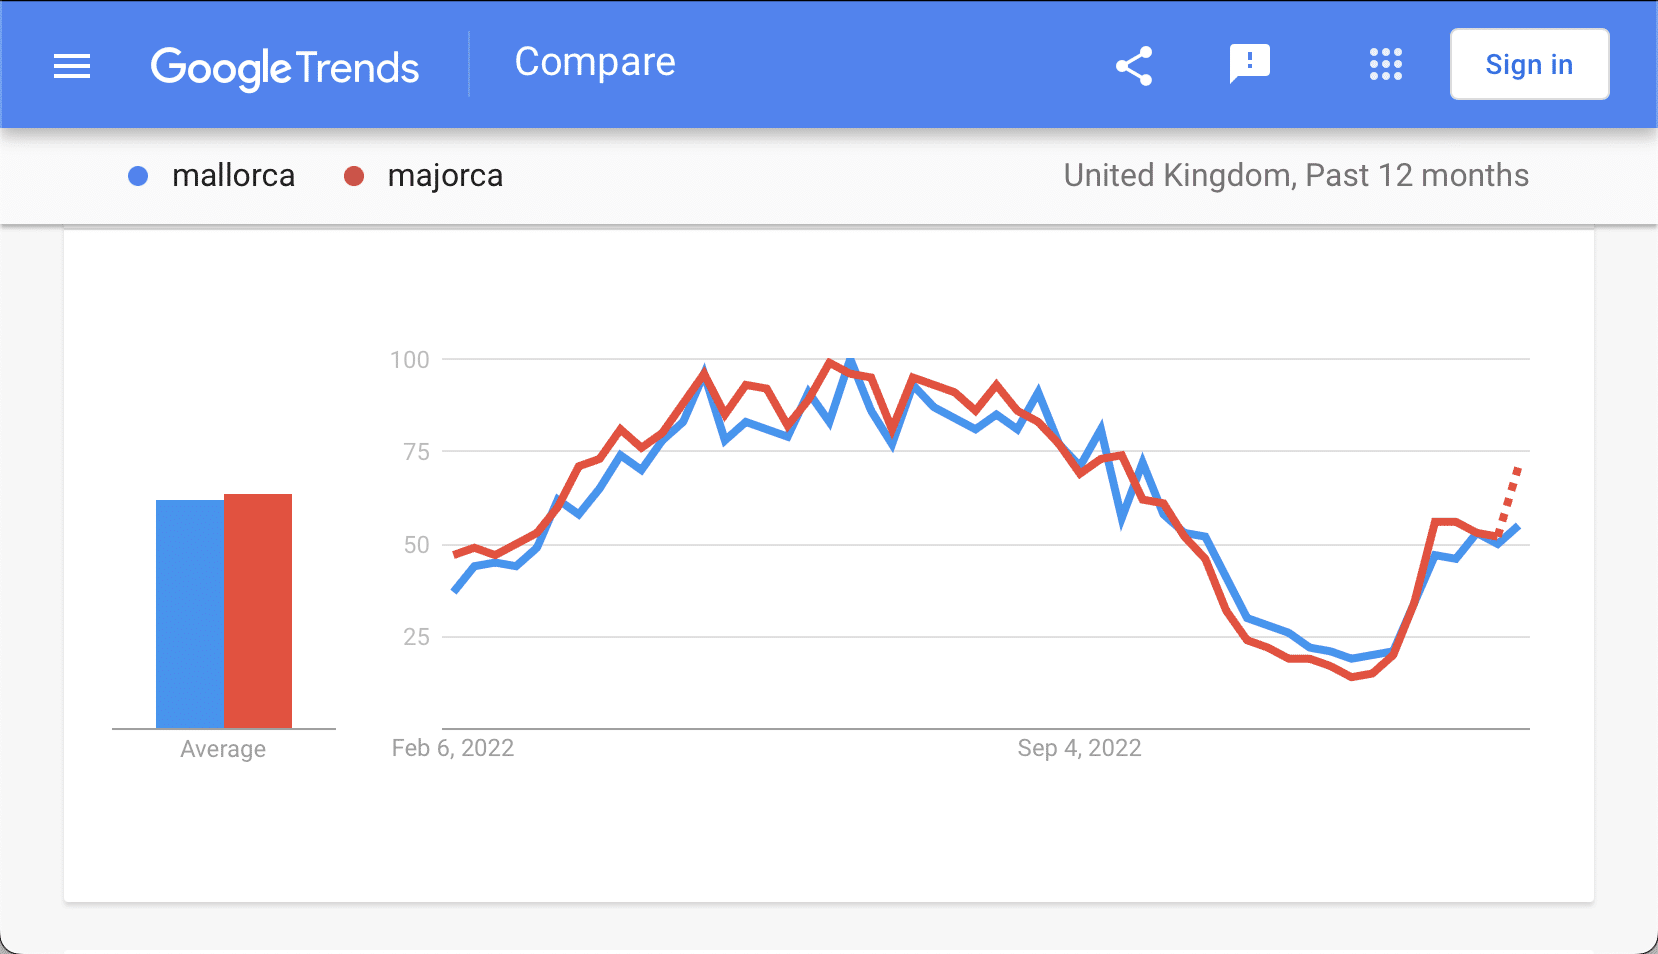 3. Google Trends mallorca vs majorca UK past 12 months